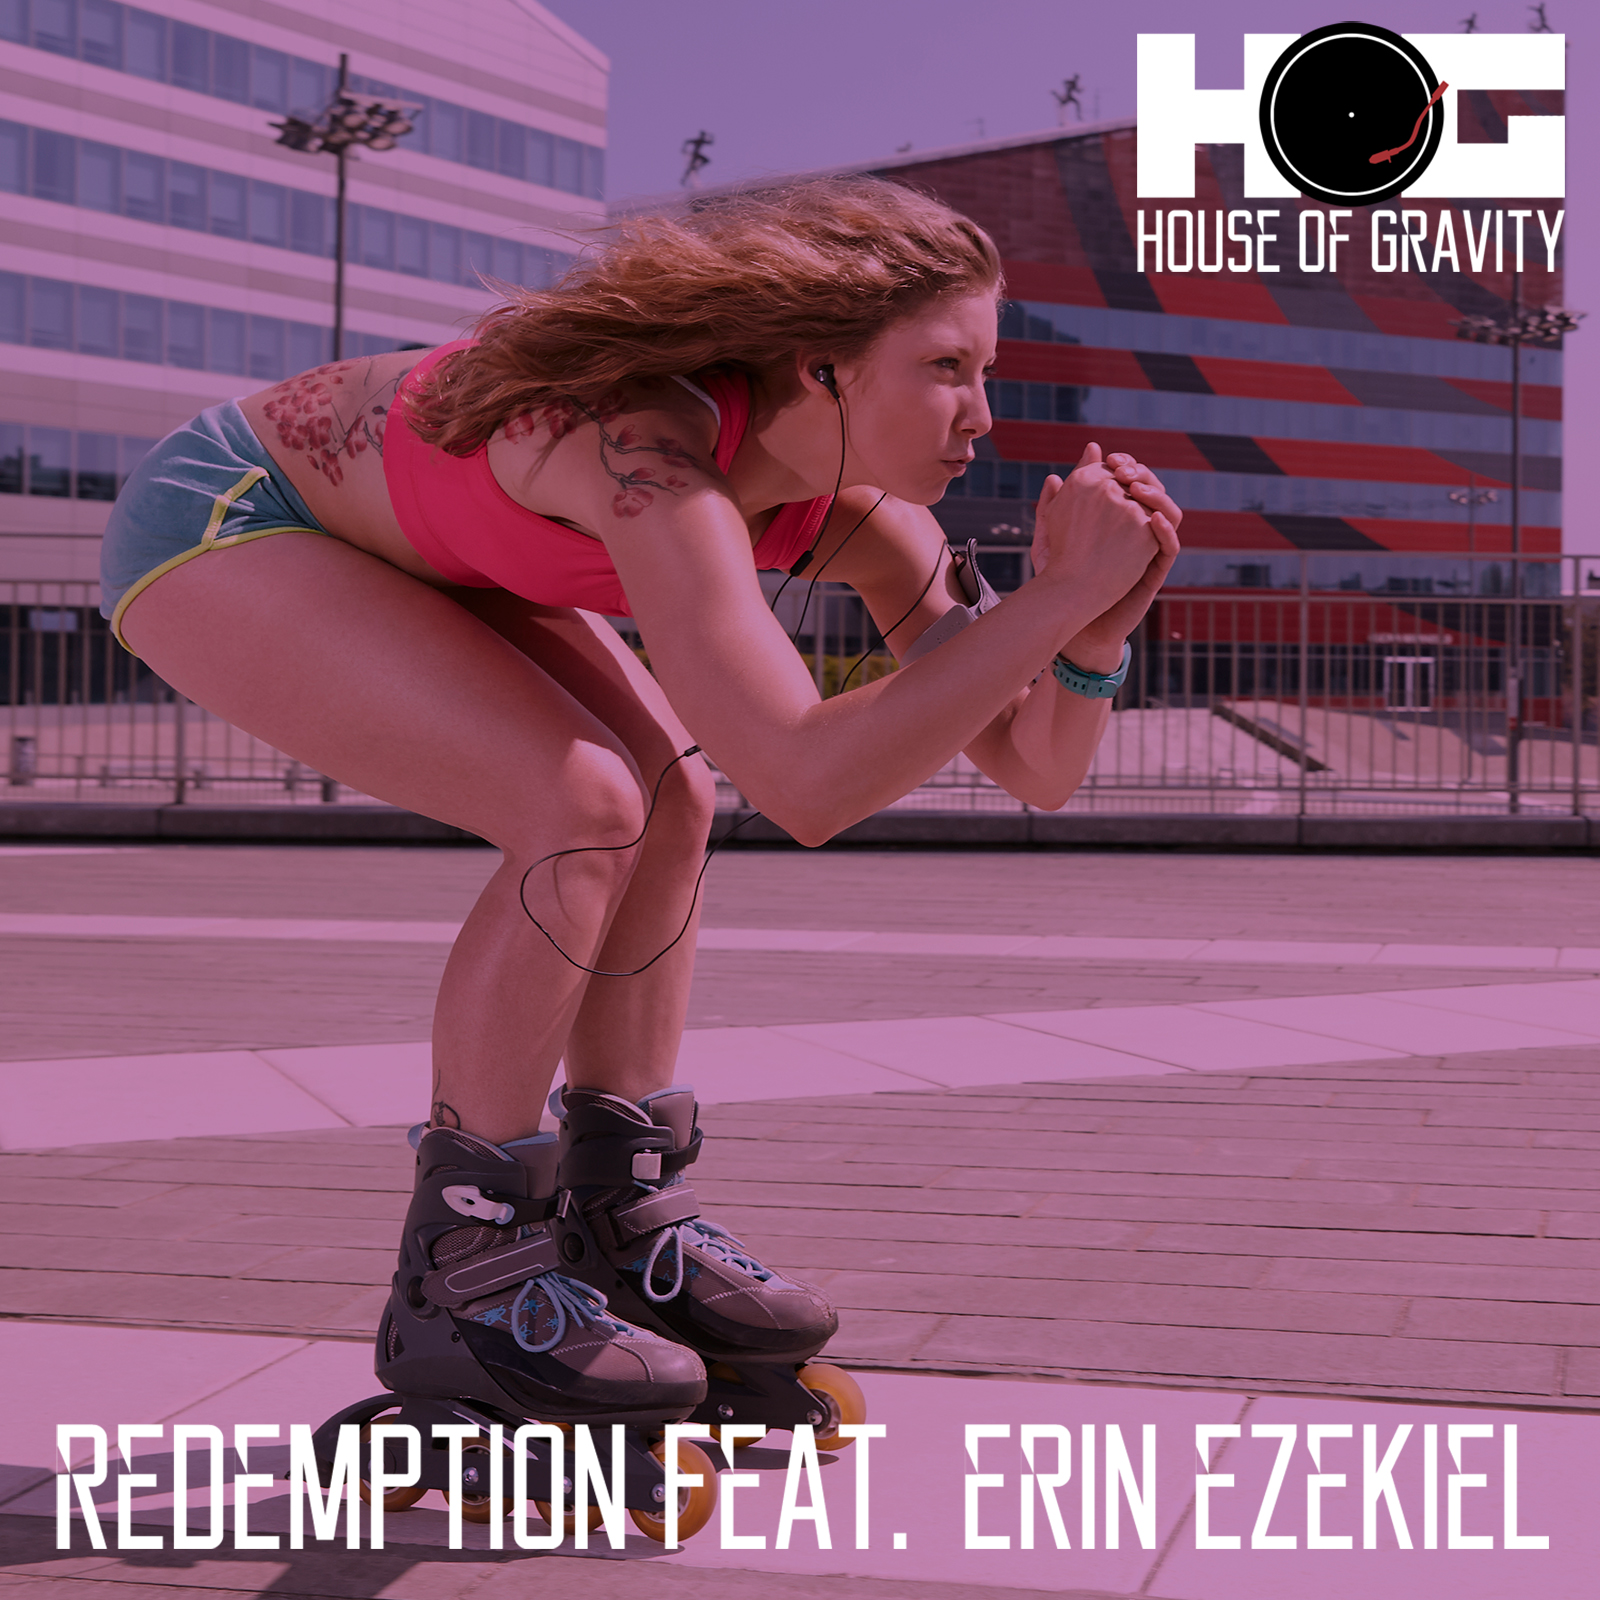 Redemption feat Erin Ezekiel by House of Gravity